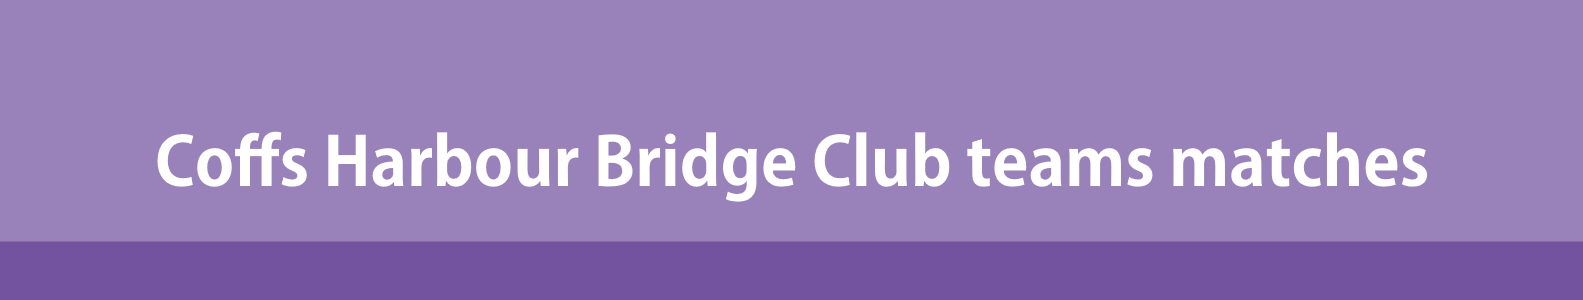 Coffs Harbour Bridge Club teams event results